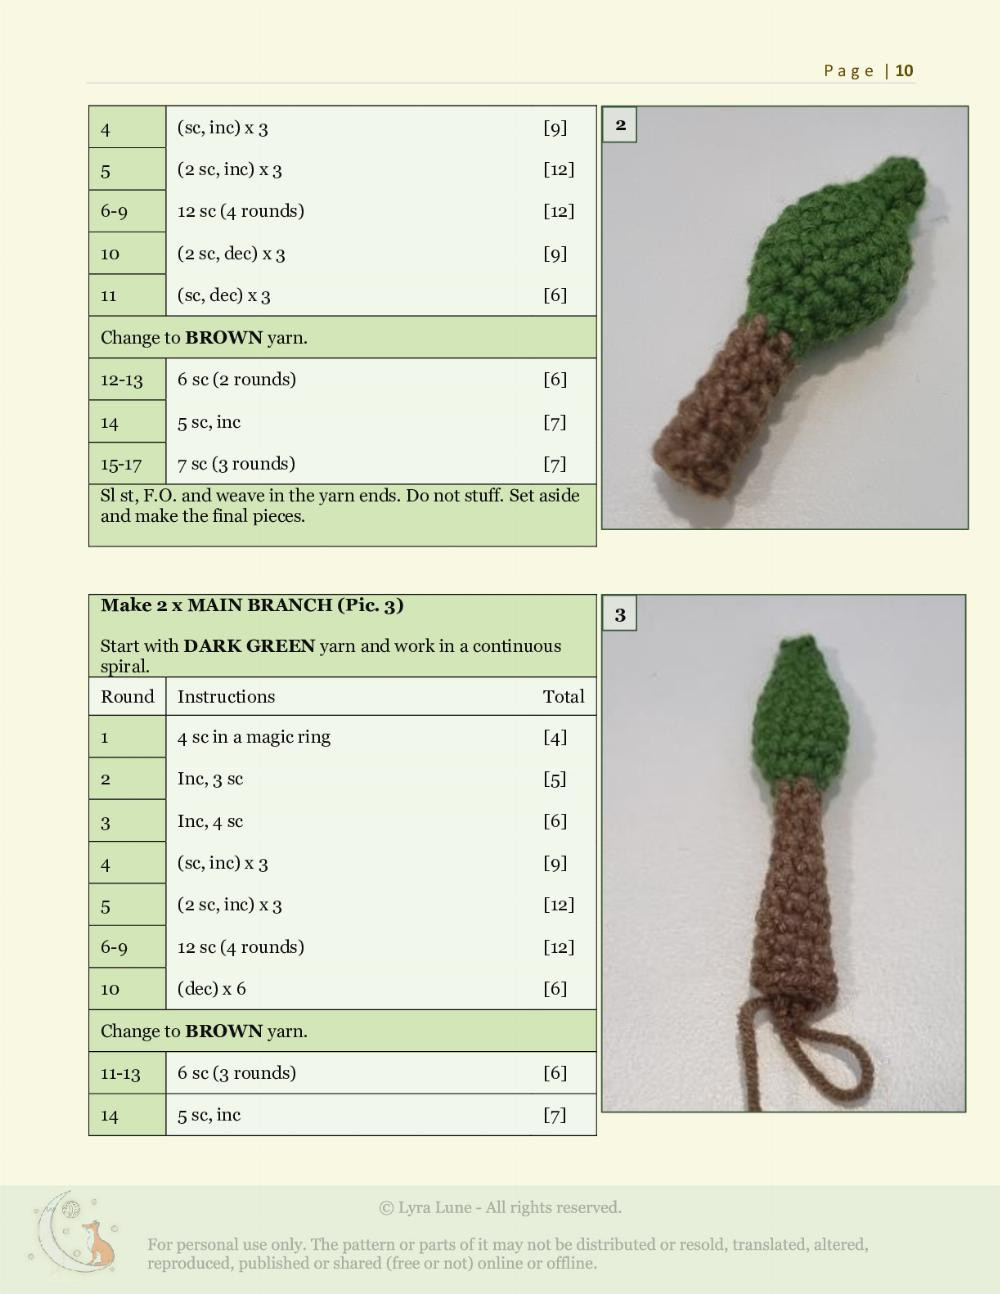 forest spirit crochet pattern